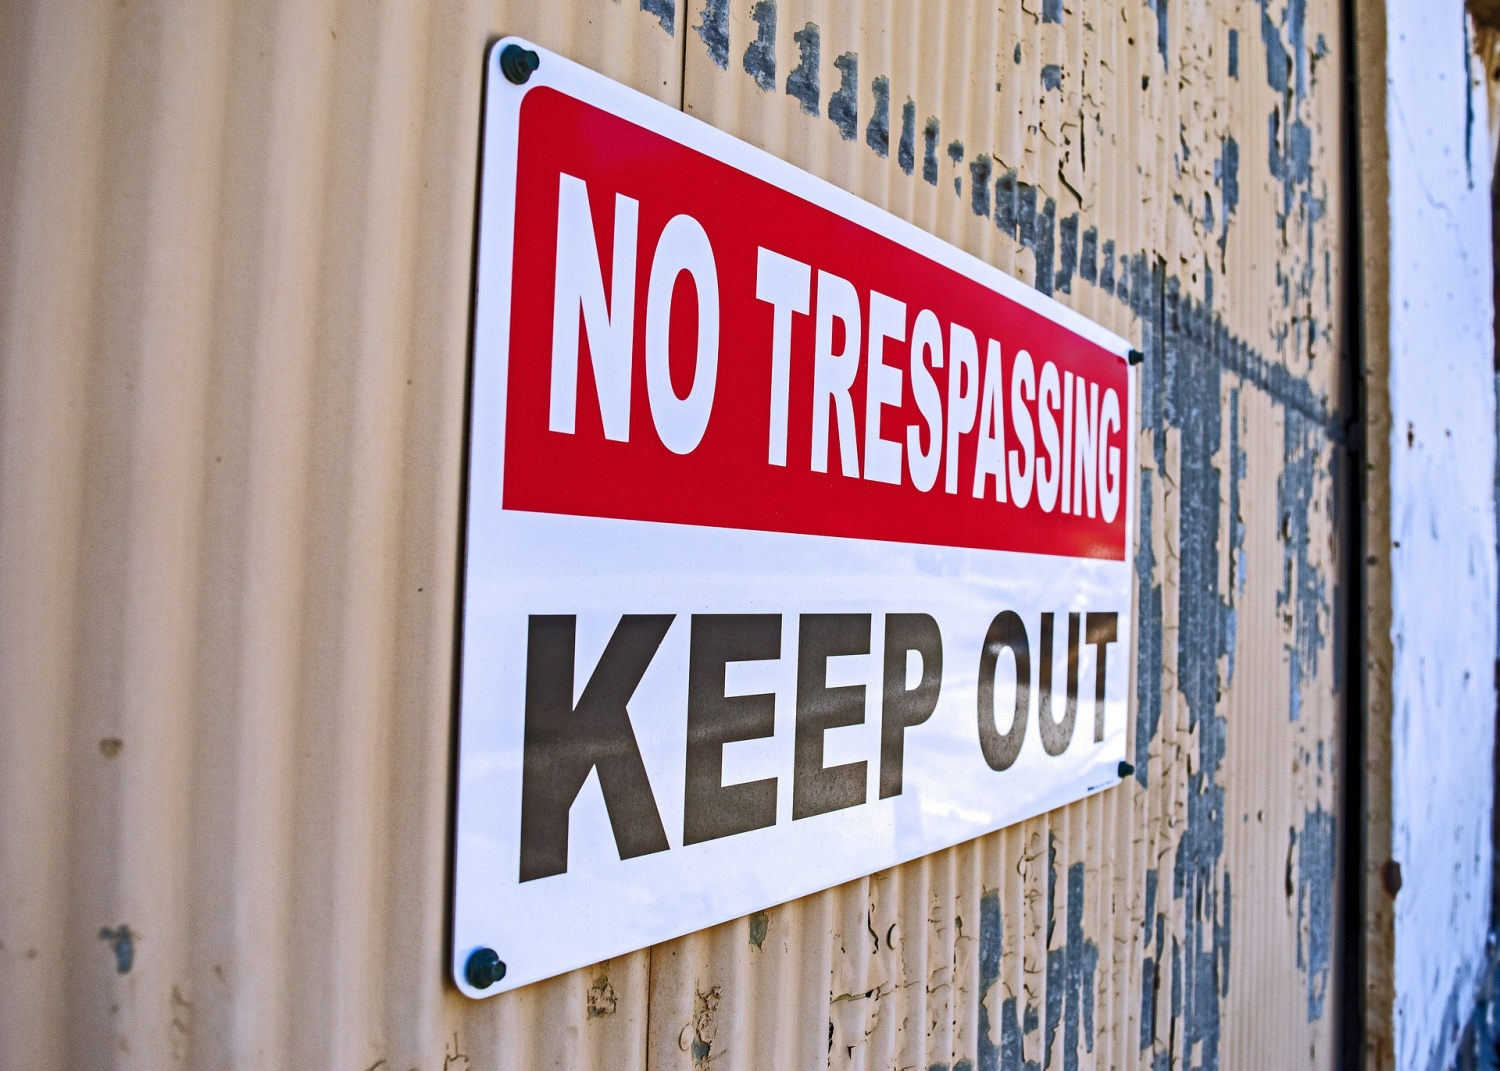 A "No trespassing" sign